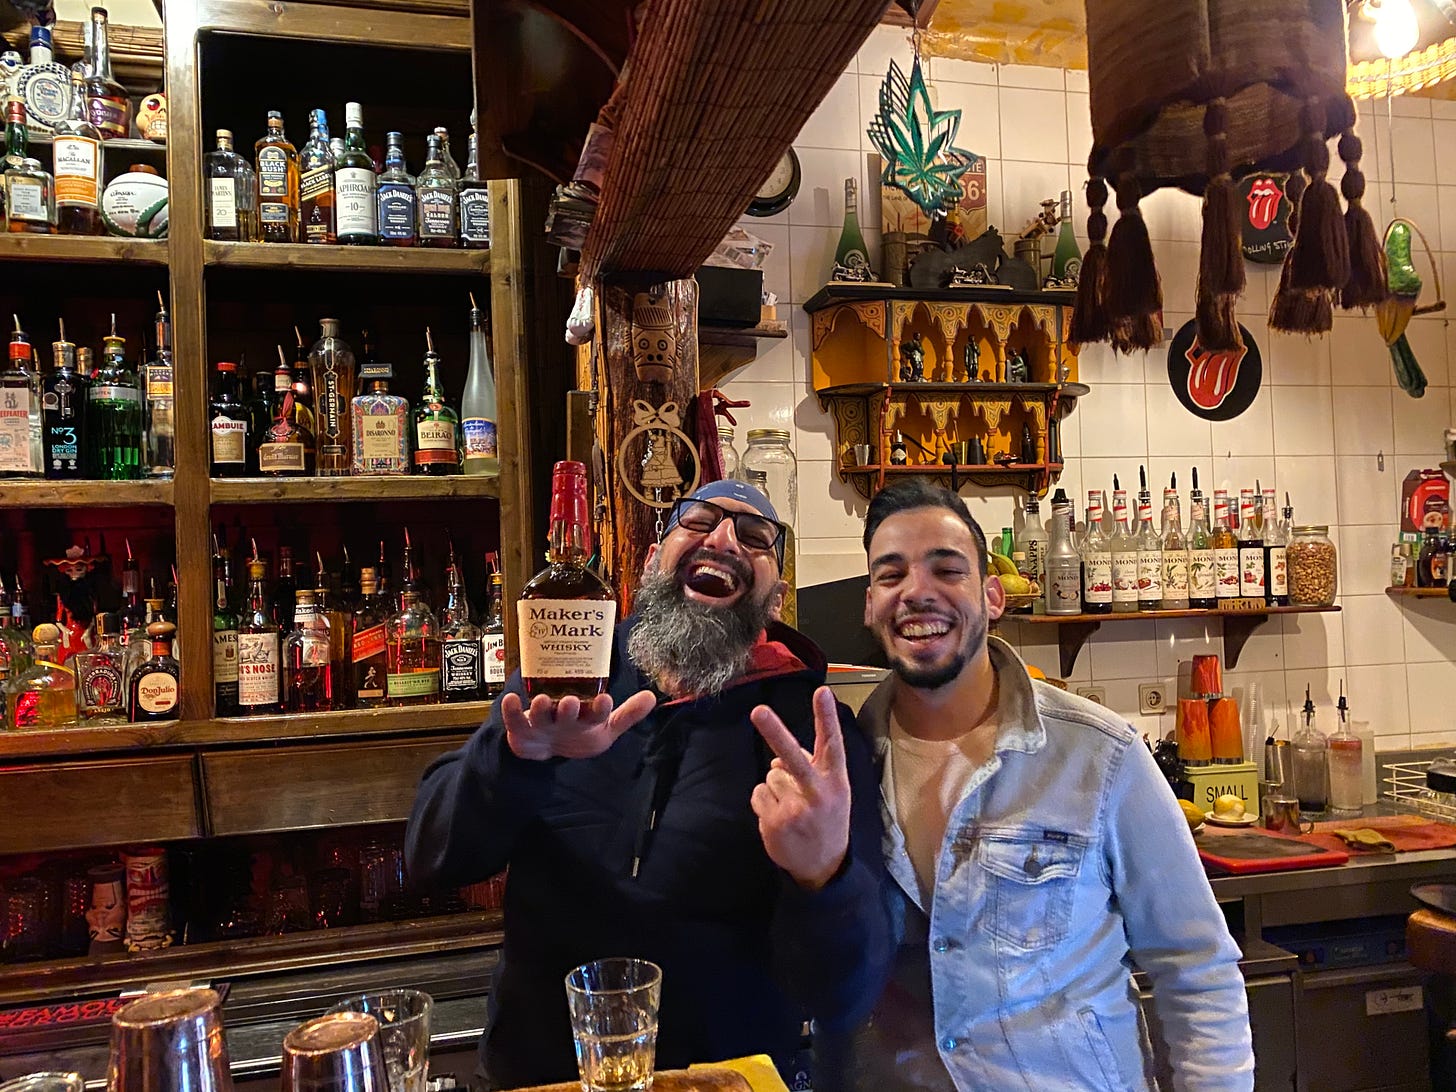 Joe Martini and Johnathan at Bar do Concelho, Samora Correia, Portugal